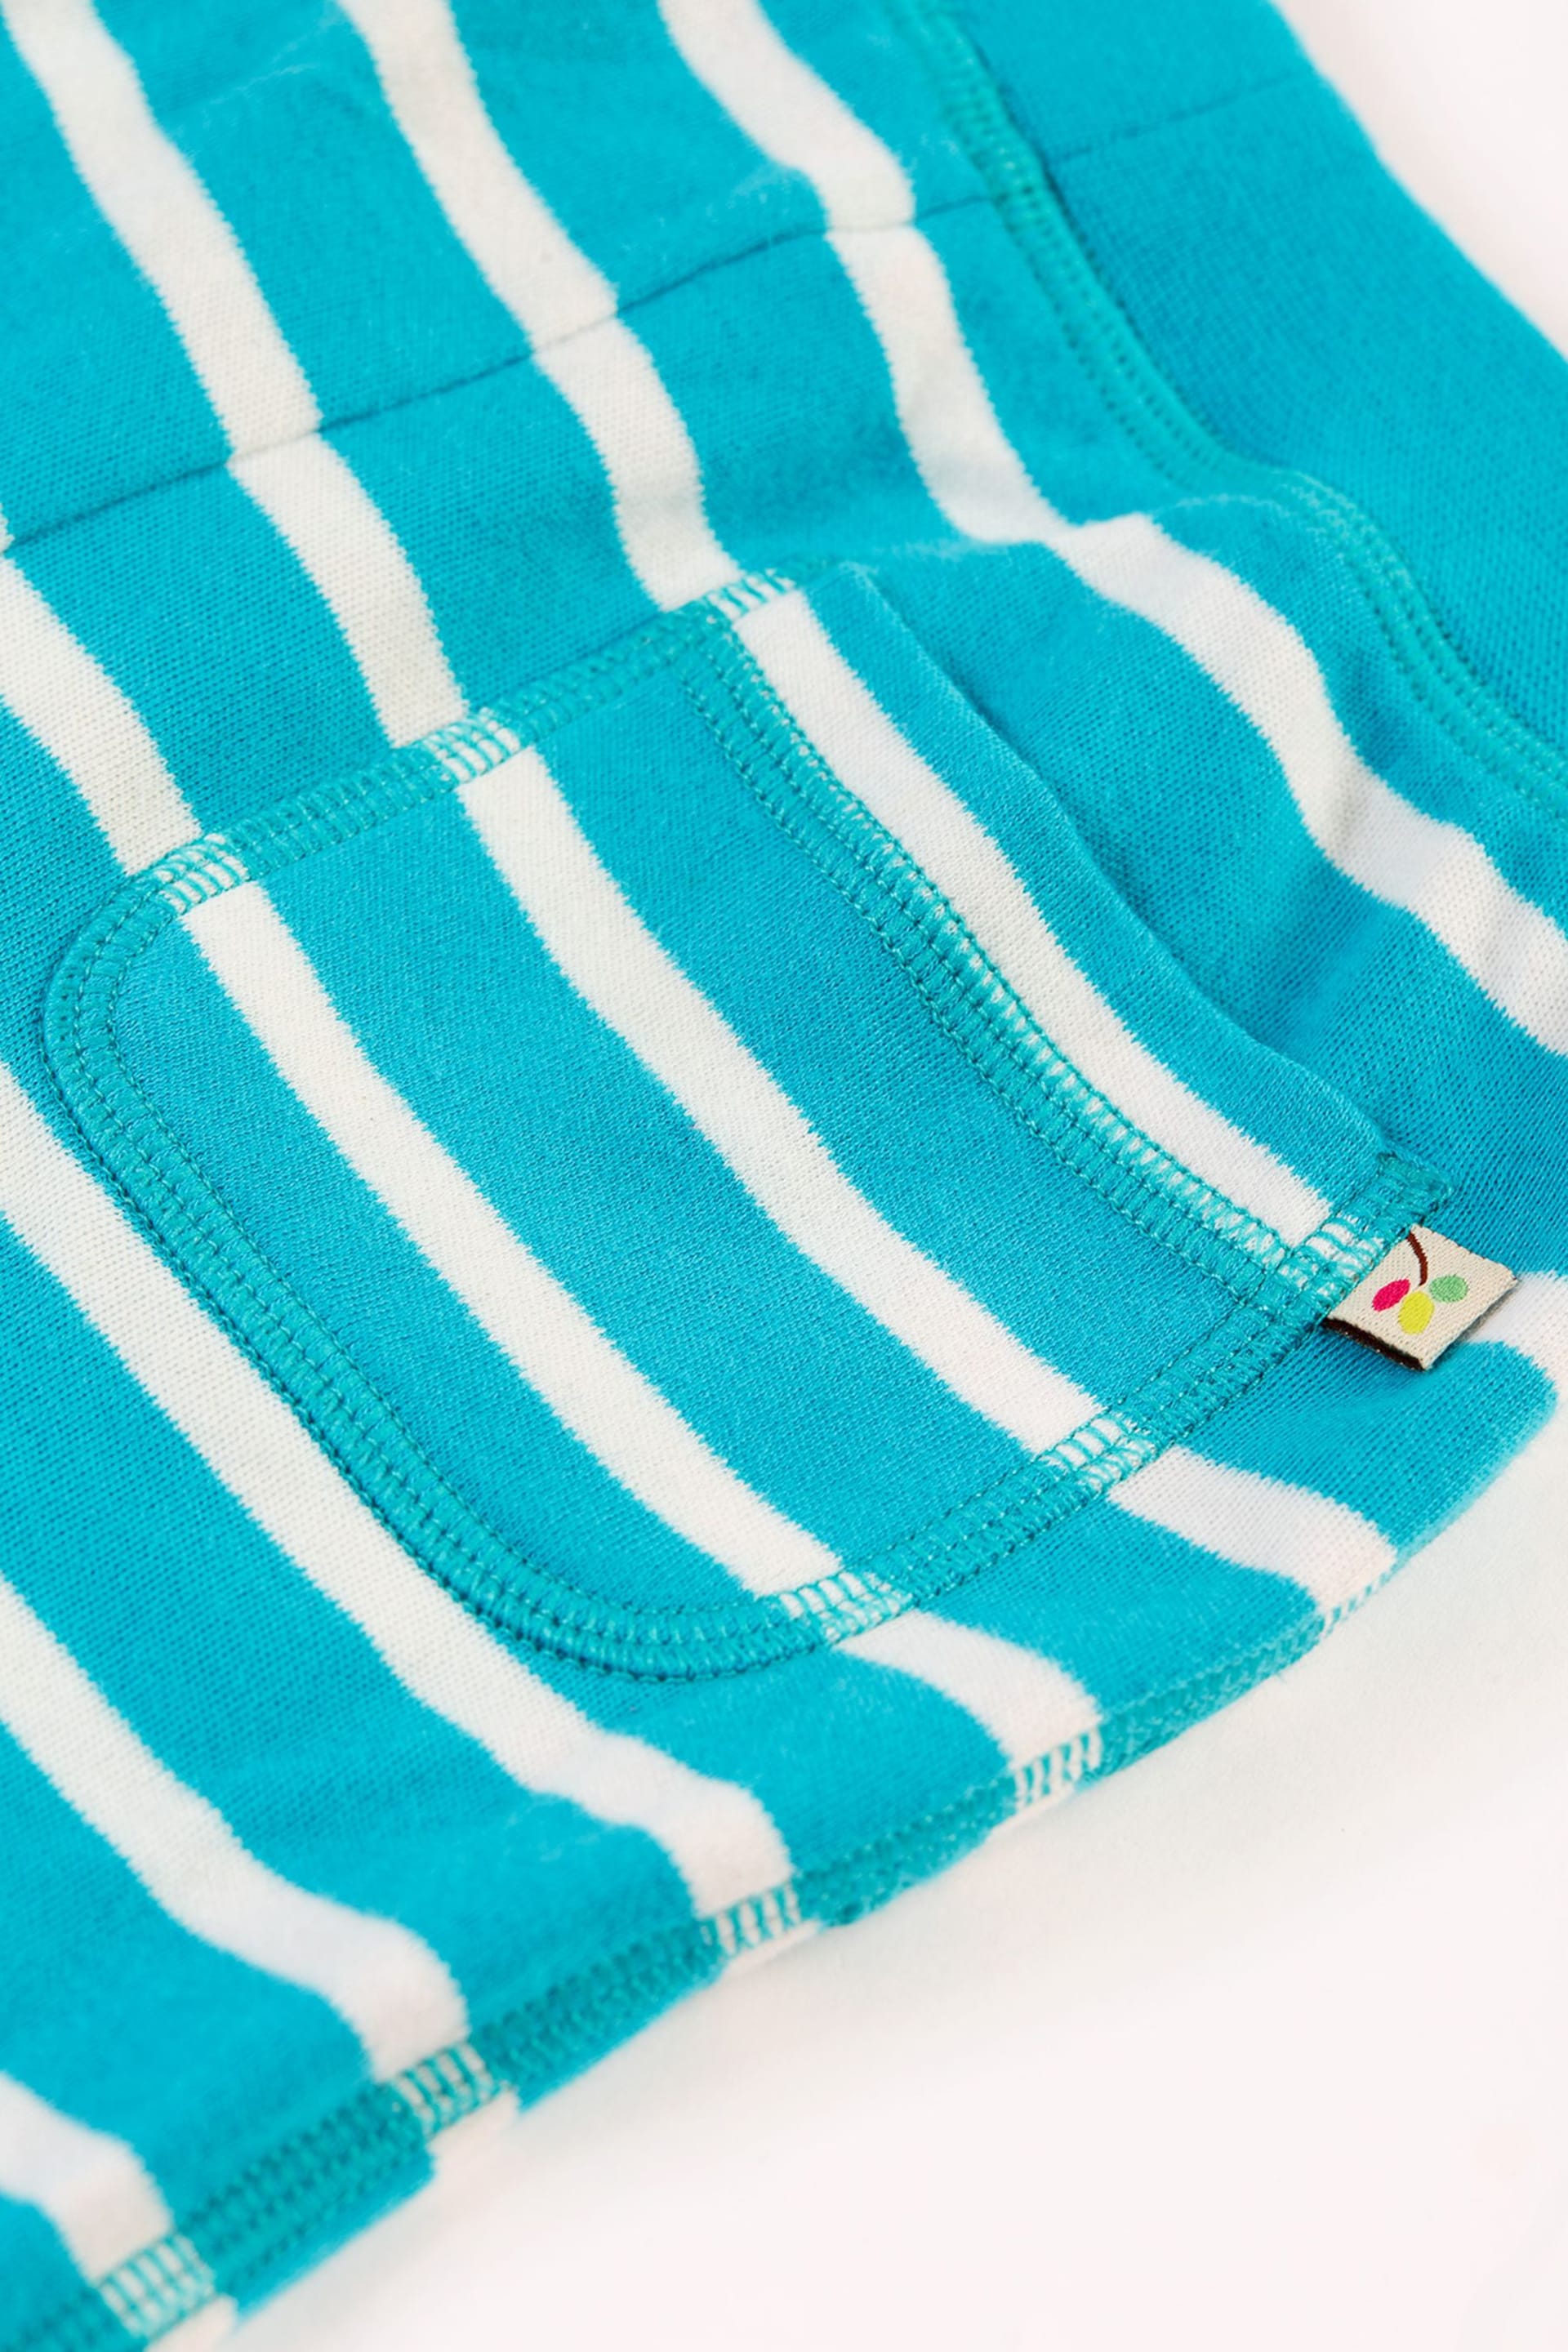 Frugi Light Blue Striped Shorts - Image 3 of 3